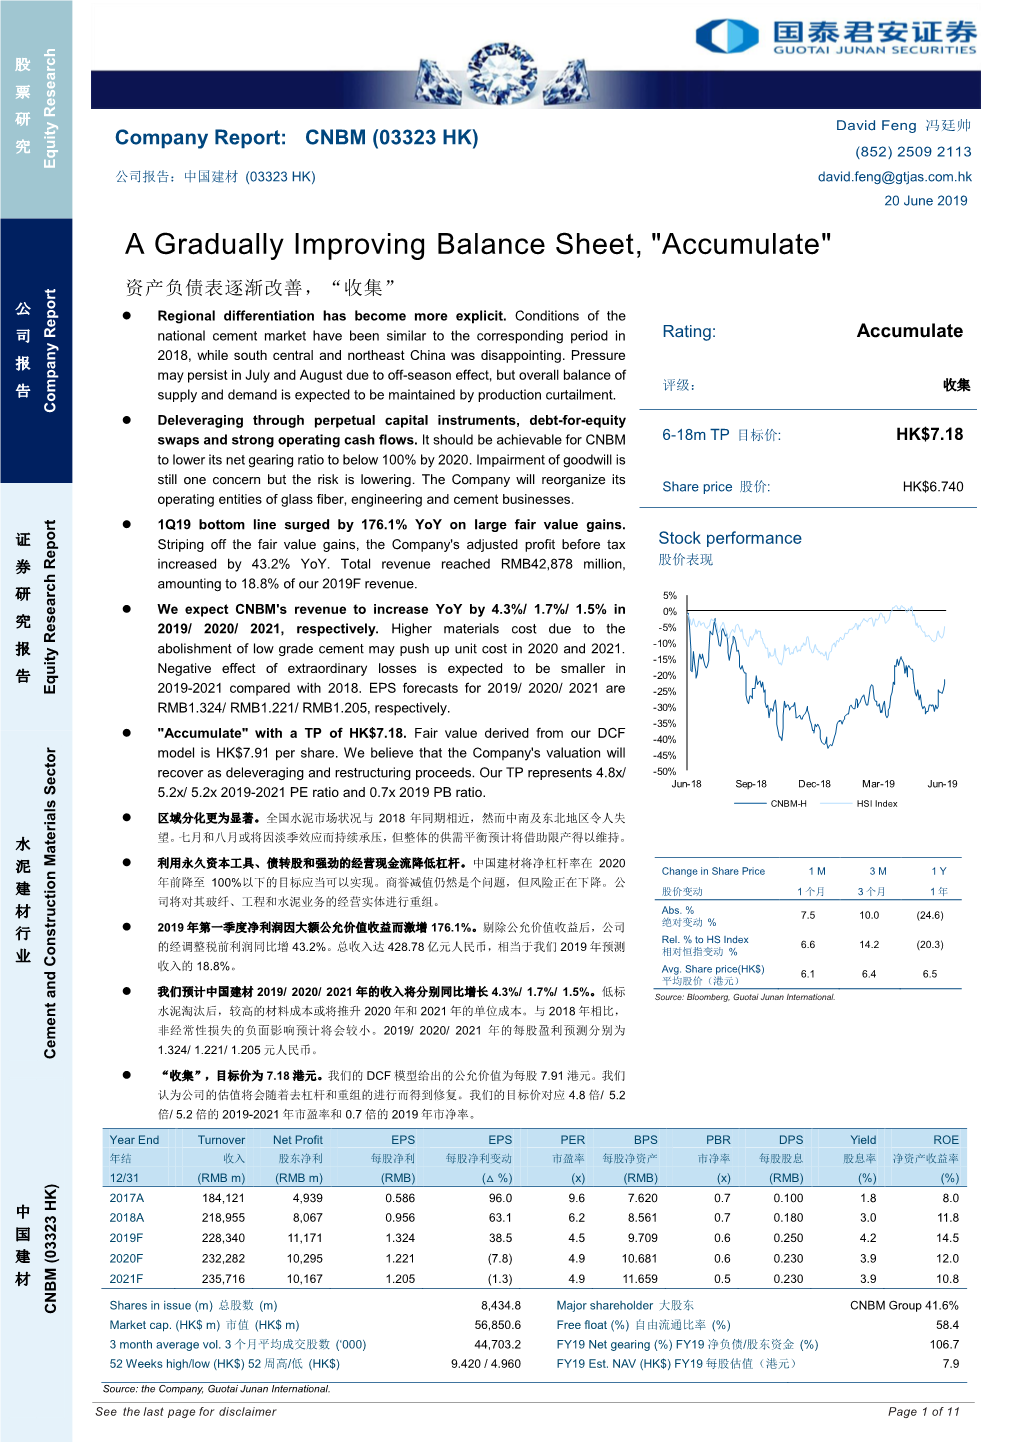 A Gradually Improving Balance Sheet, "Accumulate"